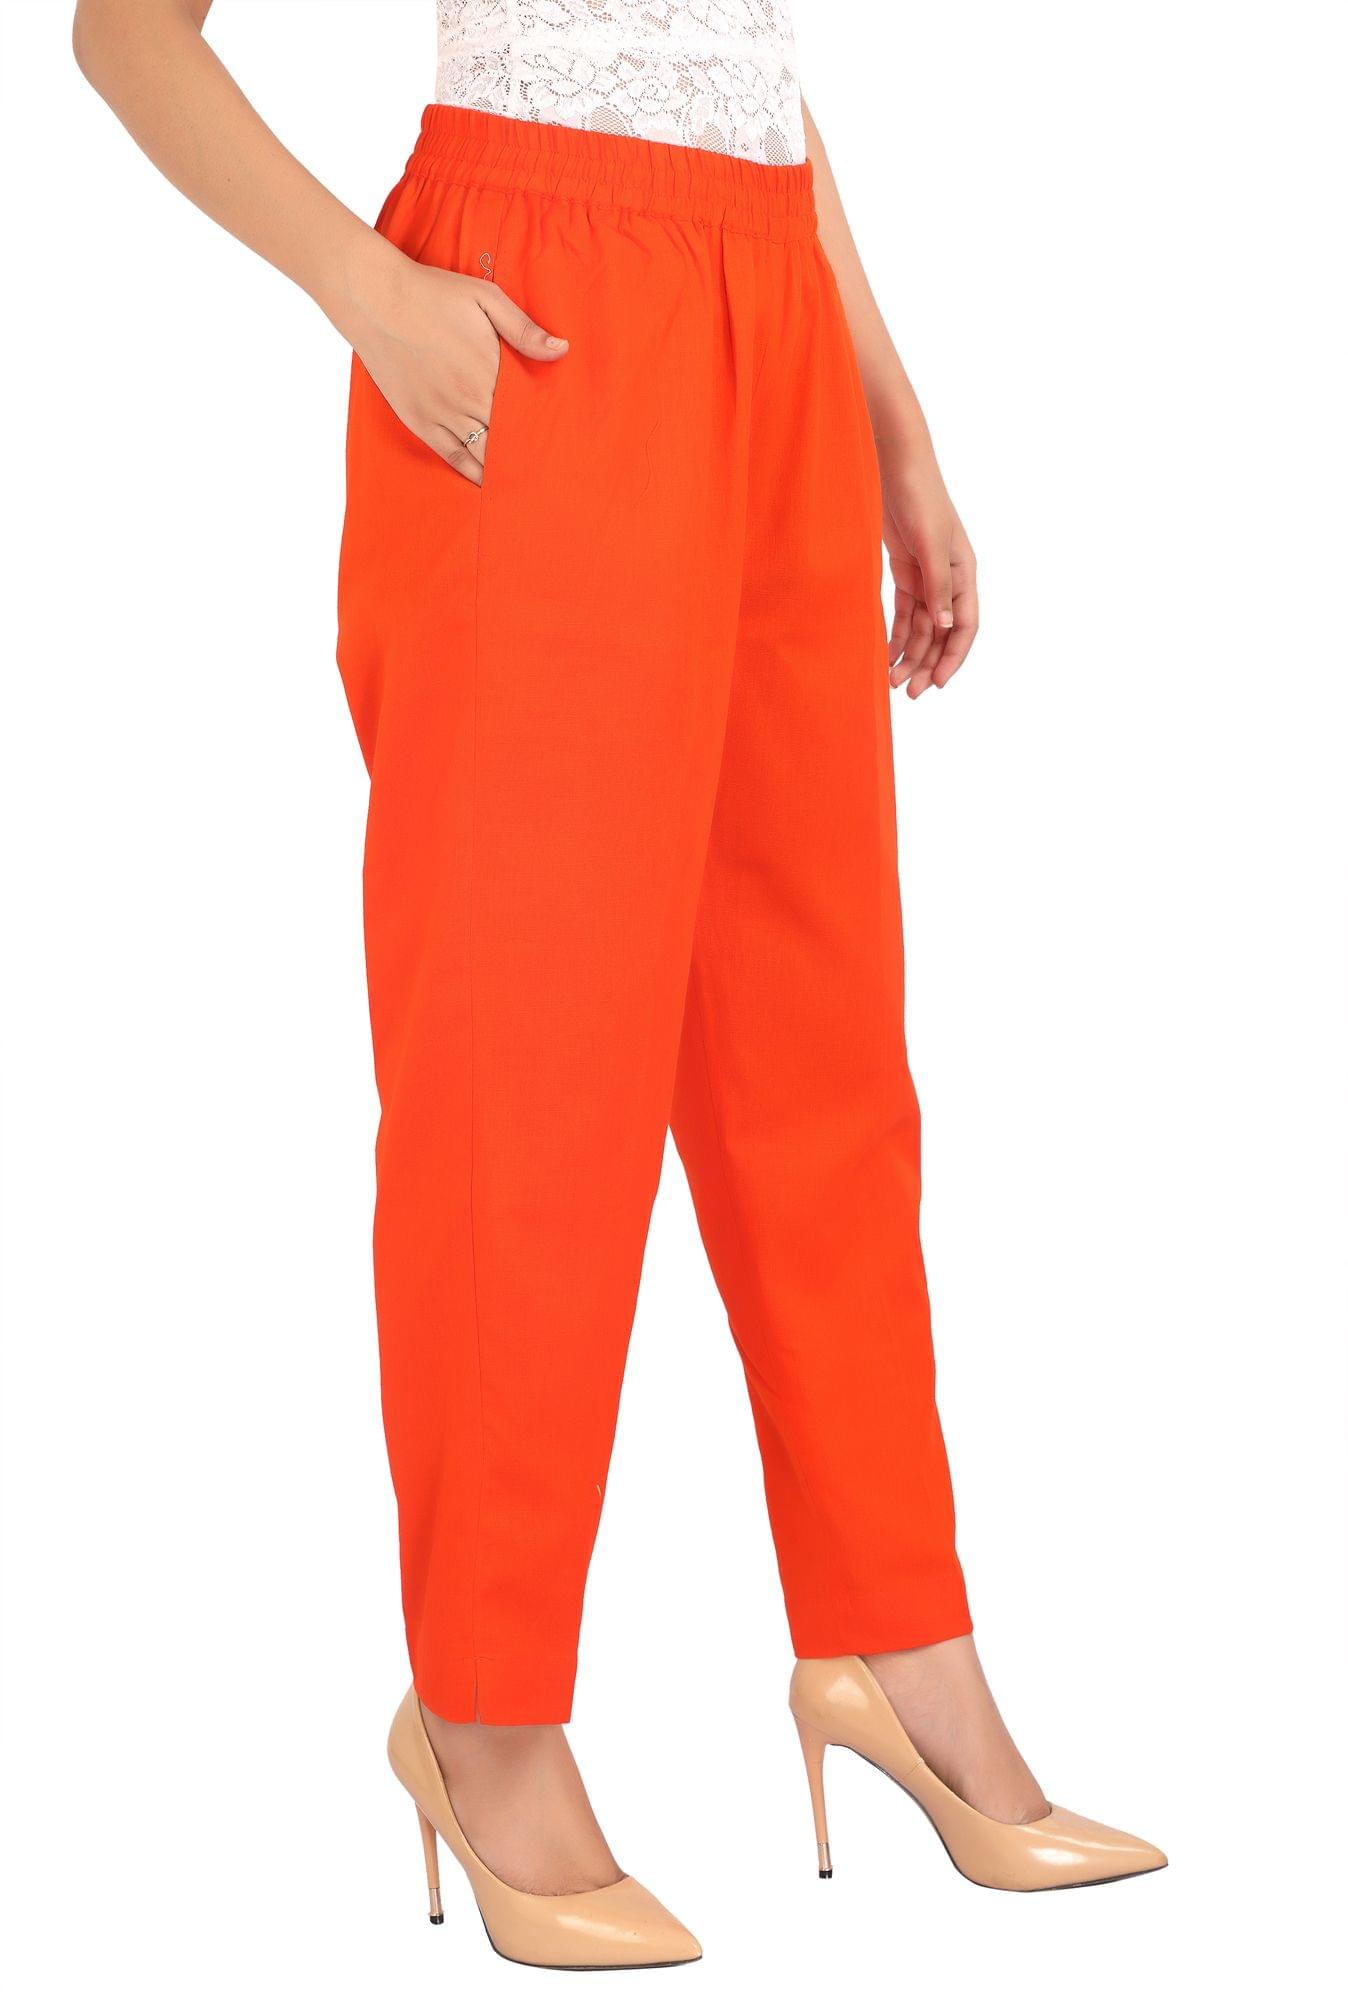 Women's Orange Cotton Pant